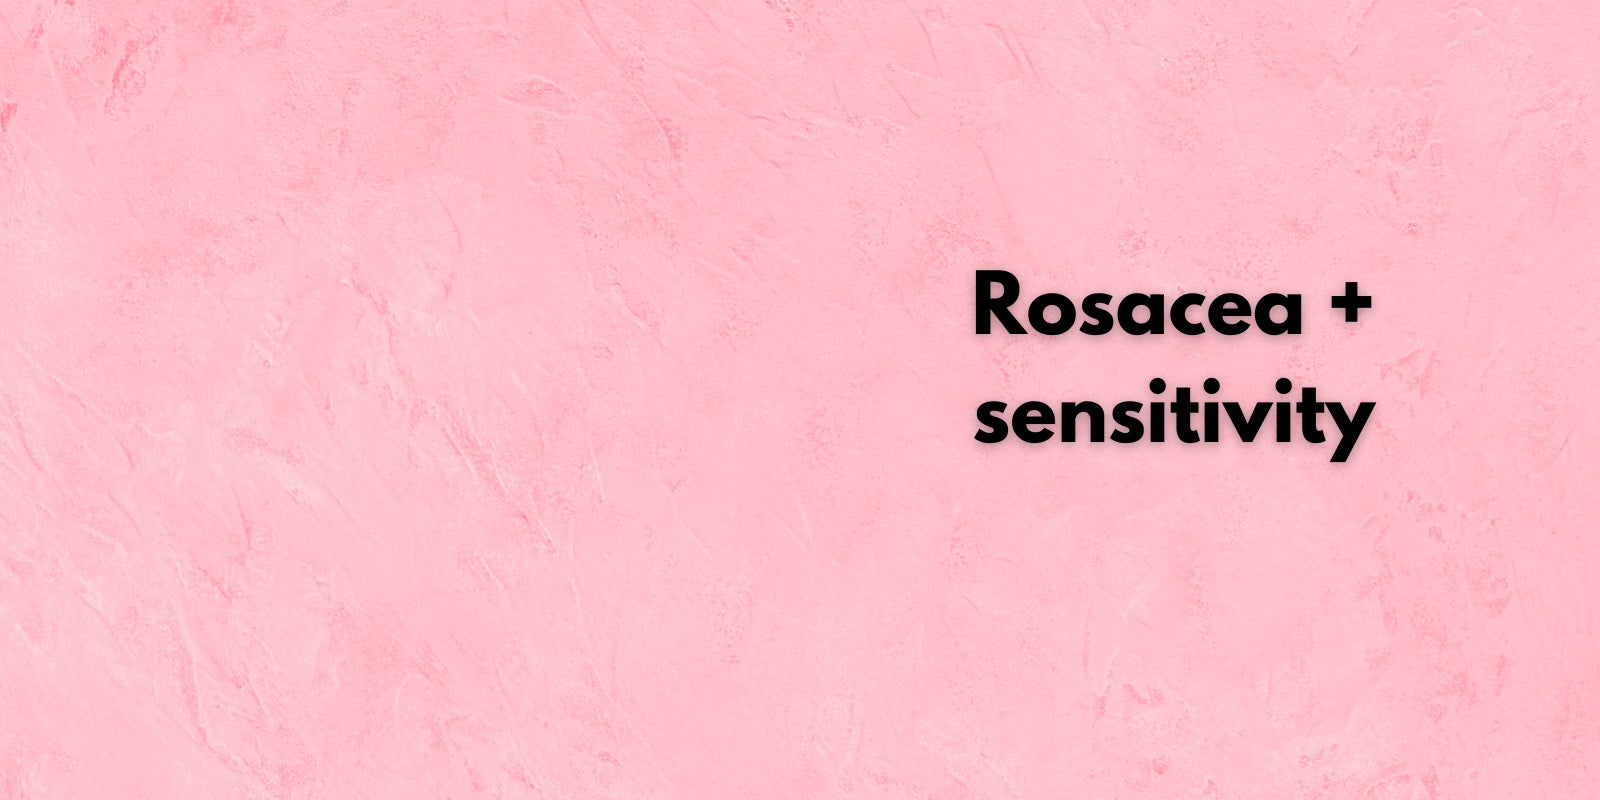 menopause + rosacea + sensitized skin Victoria BC, Vancouver BC